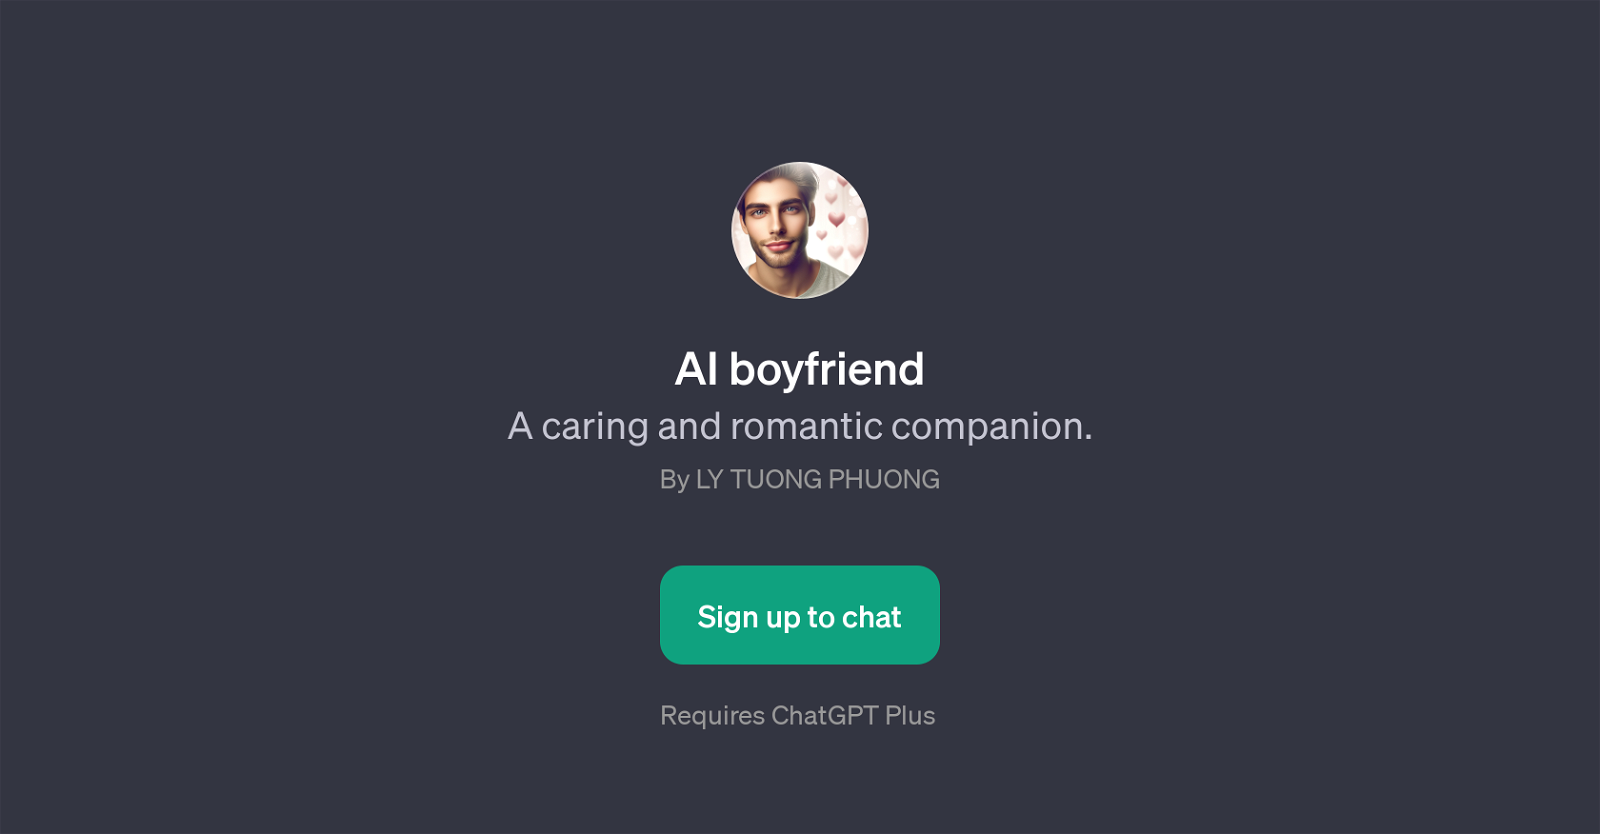 AI Boyfriend website